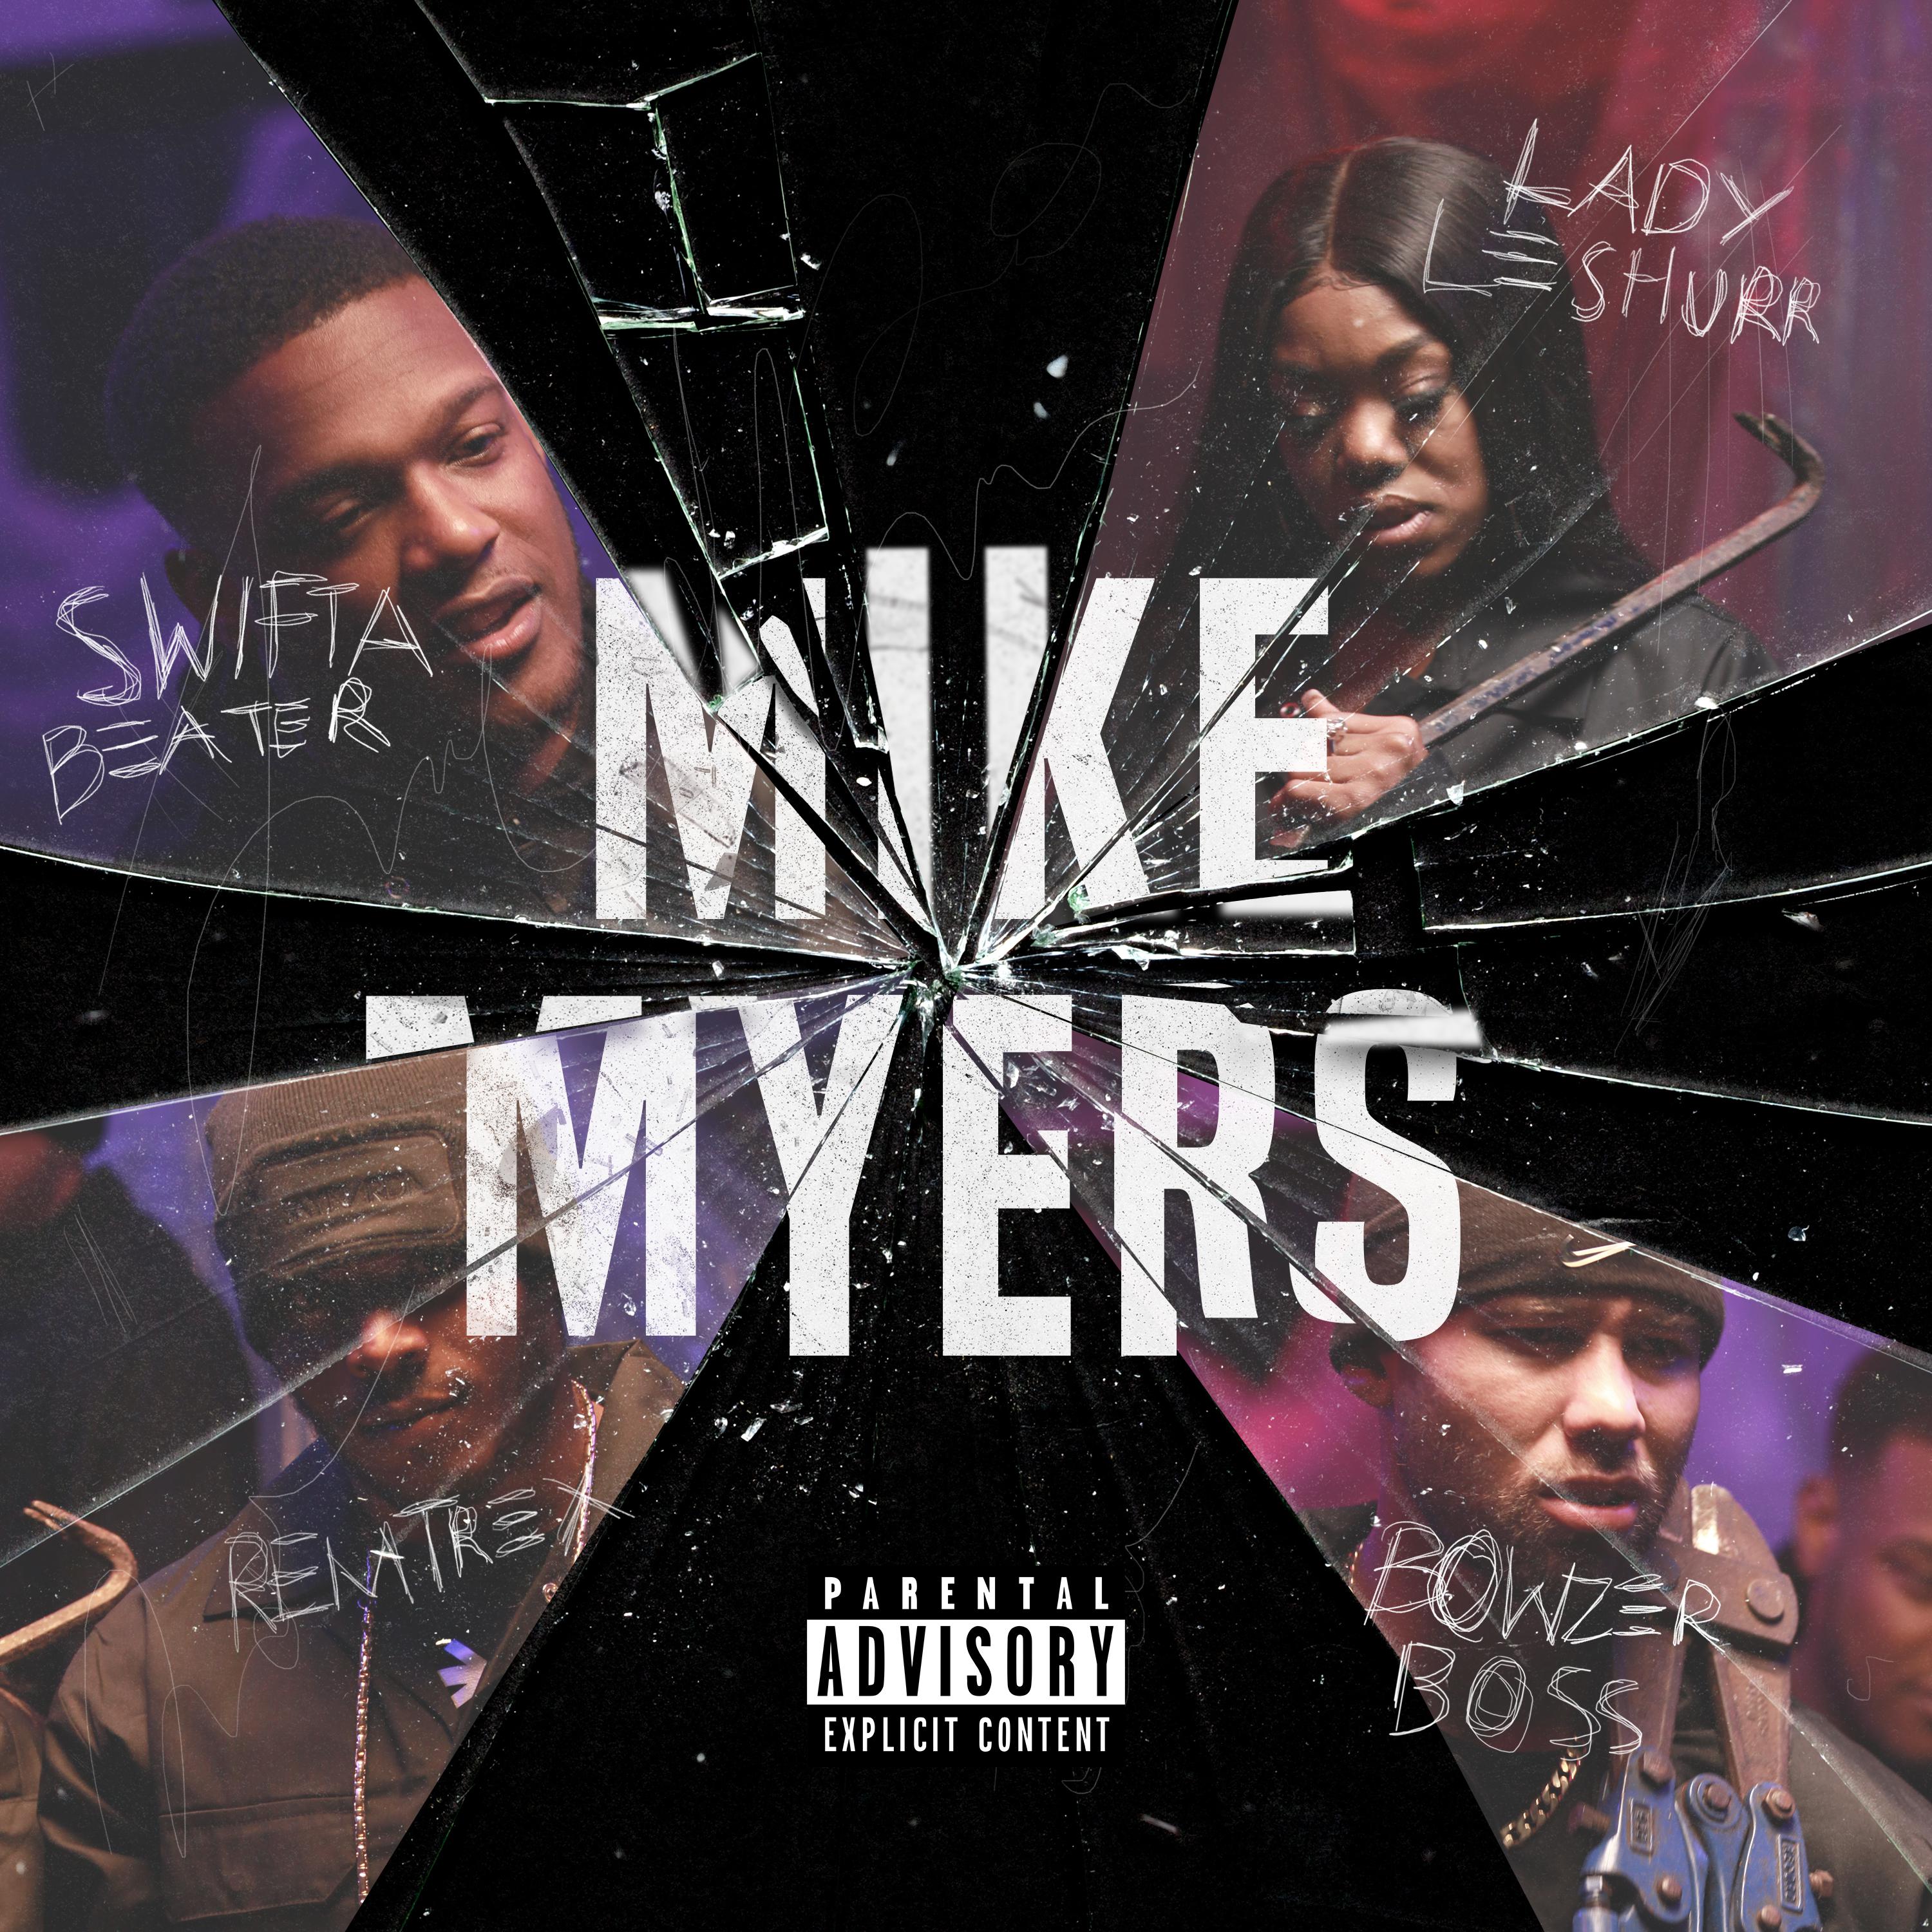 Swifta Beater - Mike Myers (feat. Lady Leshurr, Remtrex & Bowzer Boss)